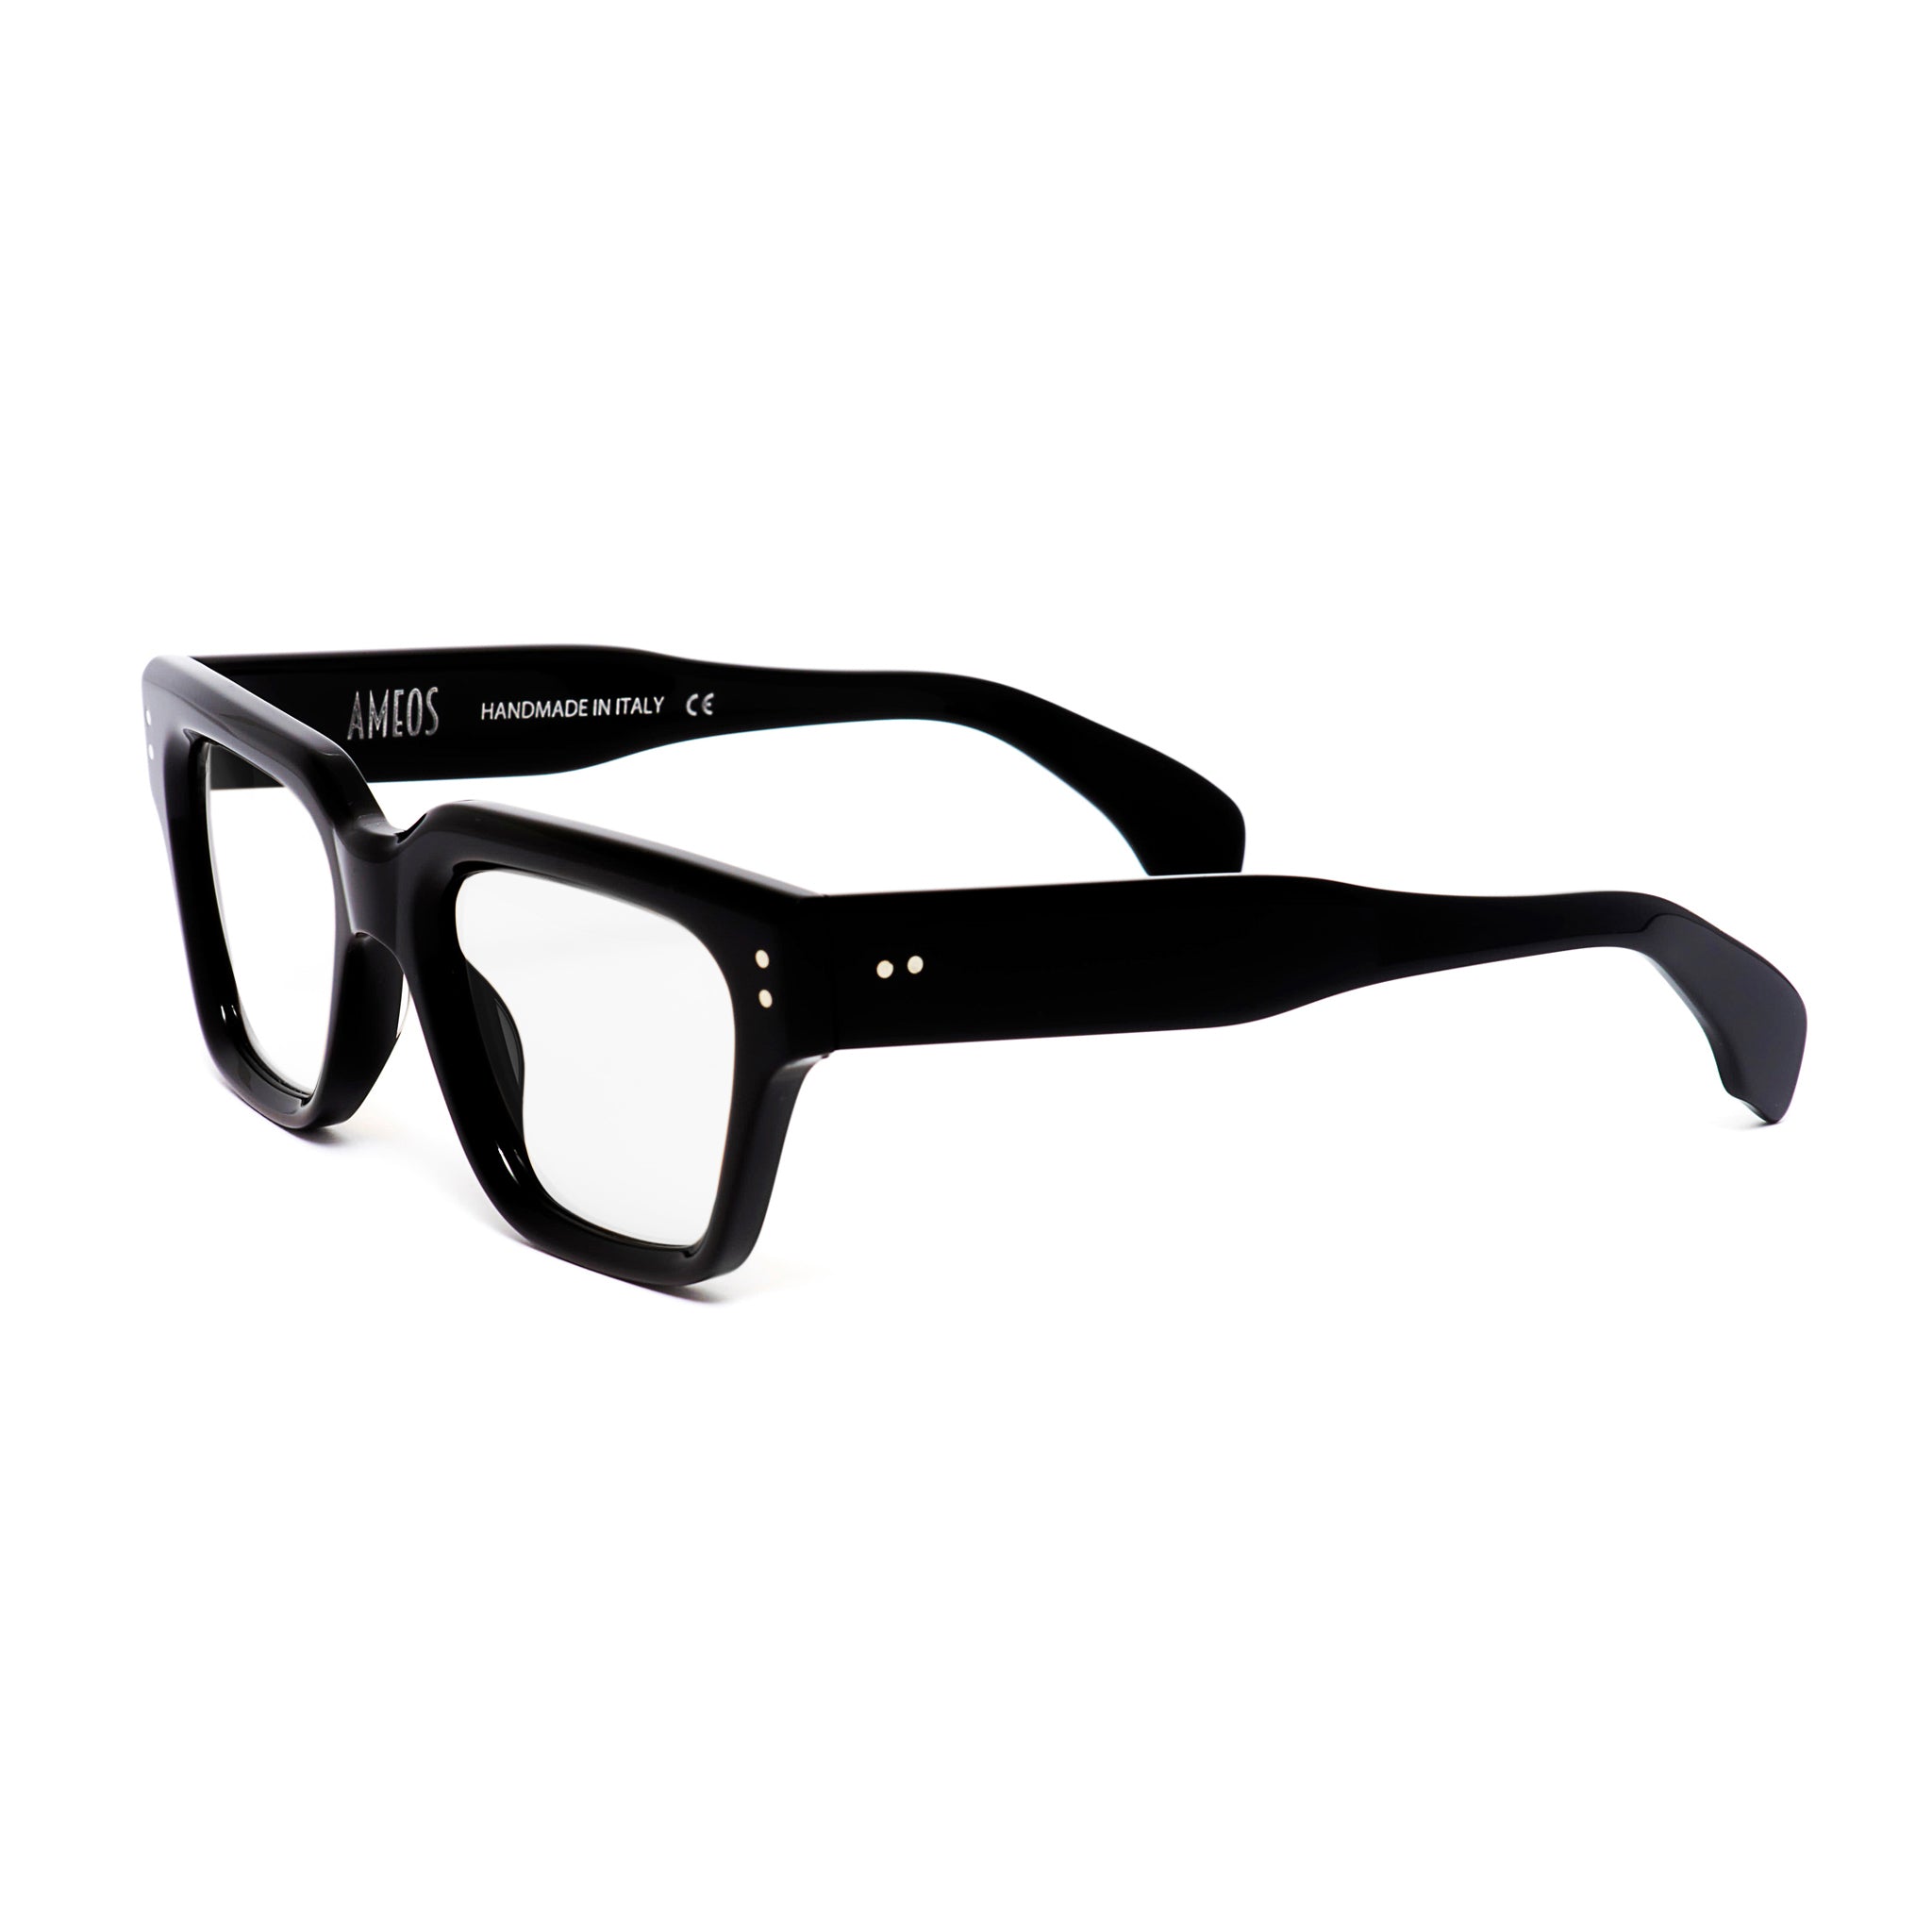 Ameos eyewear louis optical glasses in black frames. Unisex and handmade in italy.